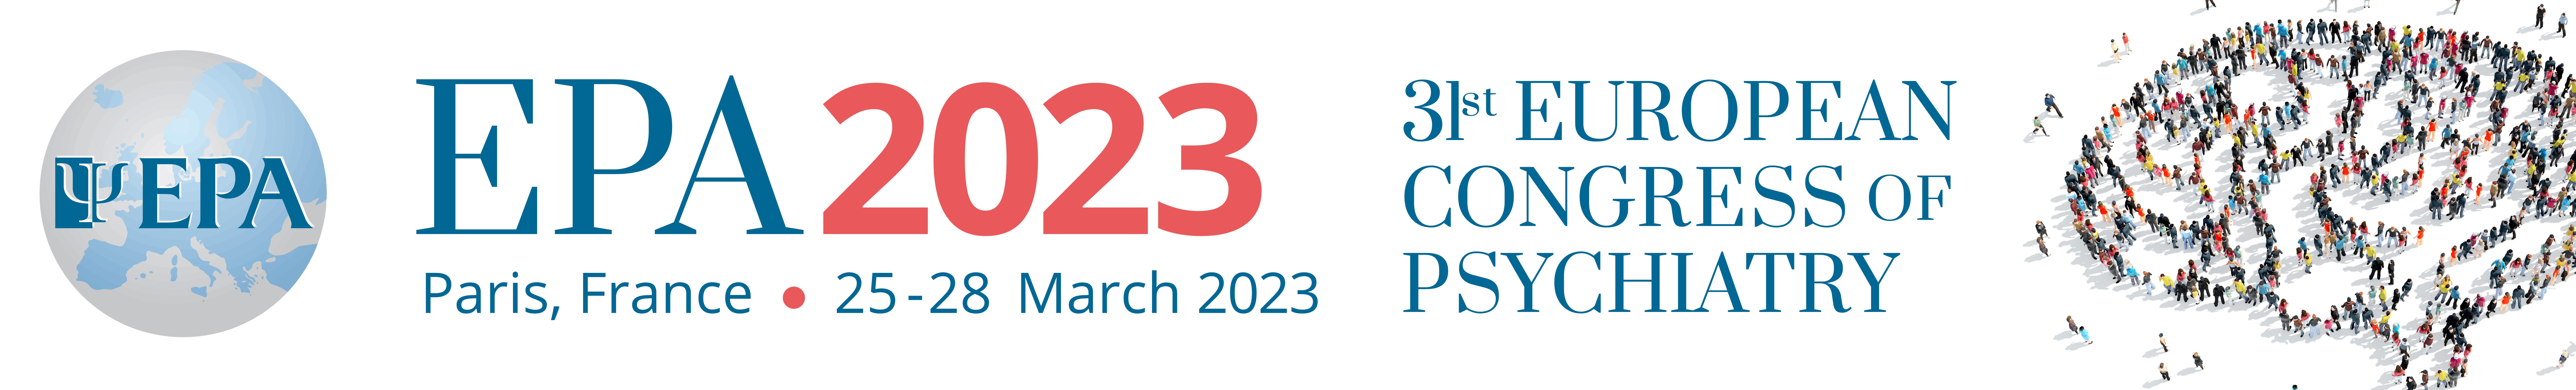 31st European Congress of Psychiatry